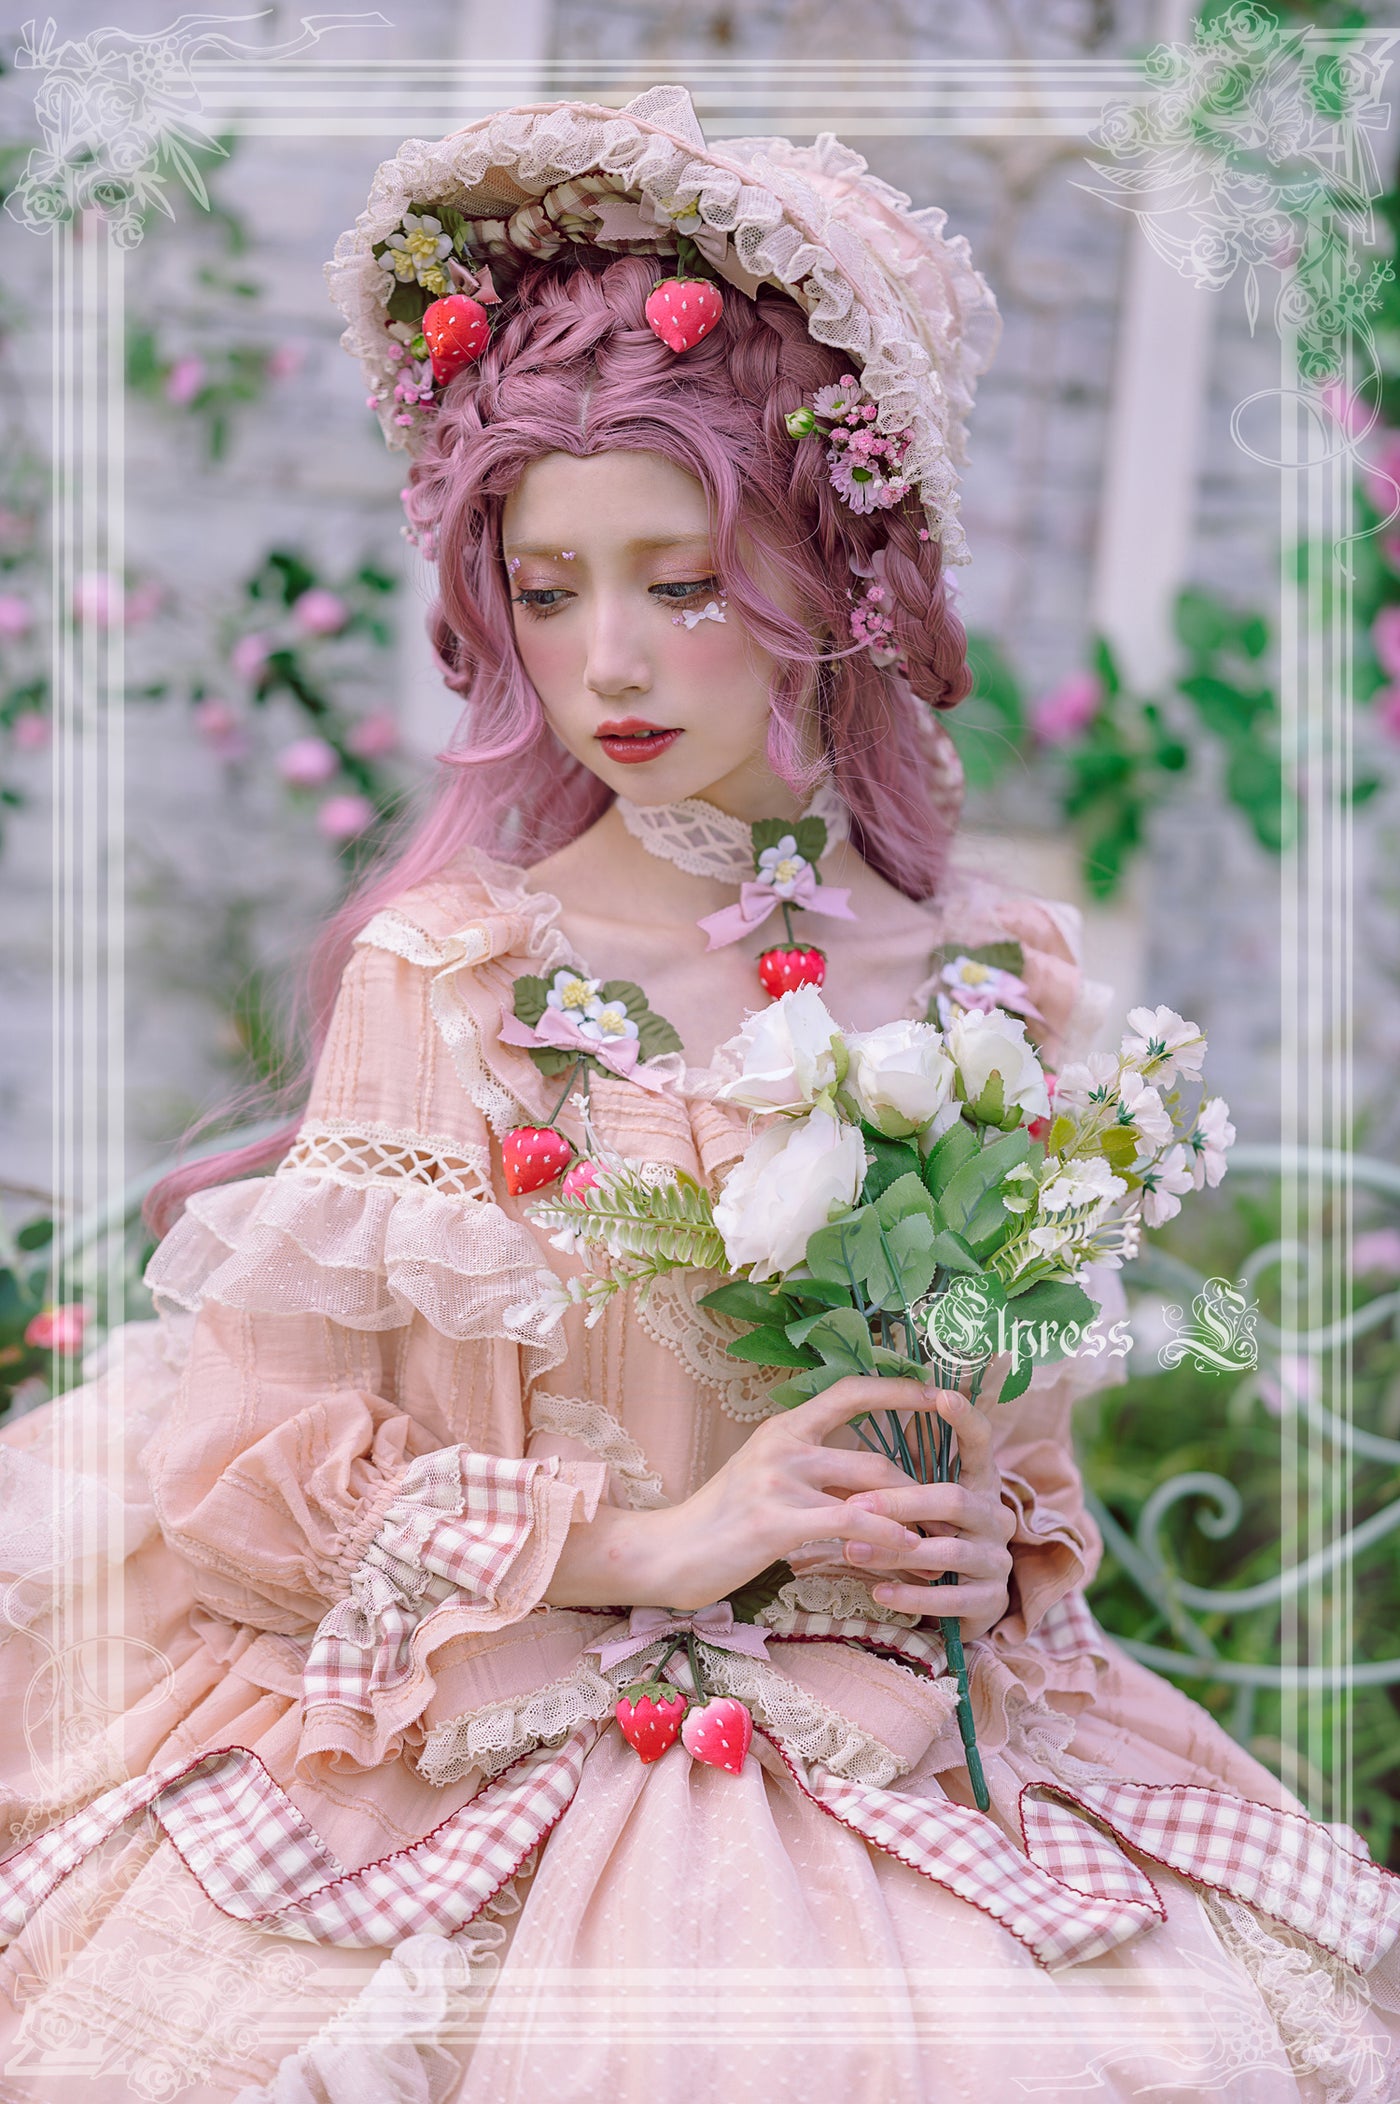 Elpress L~Peach Fragrance~Country Lolita Multicolors Strawberry Lolita OP Dress   